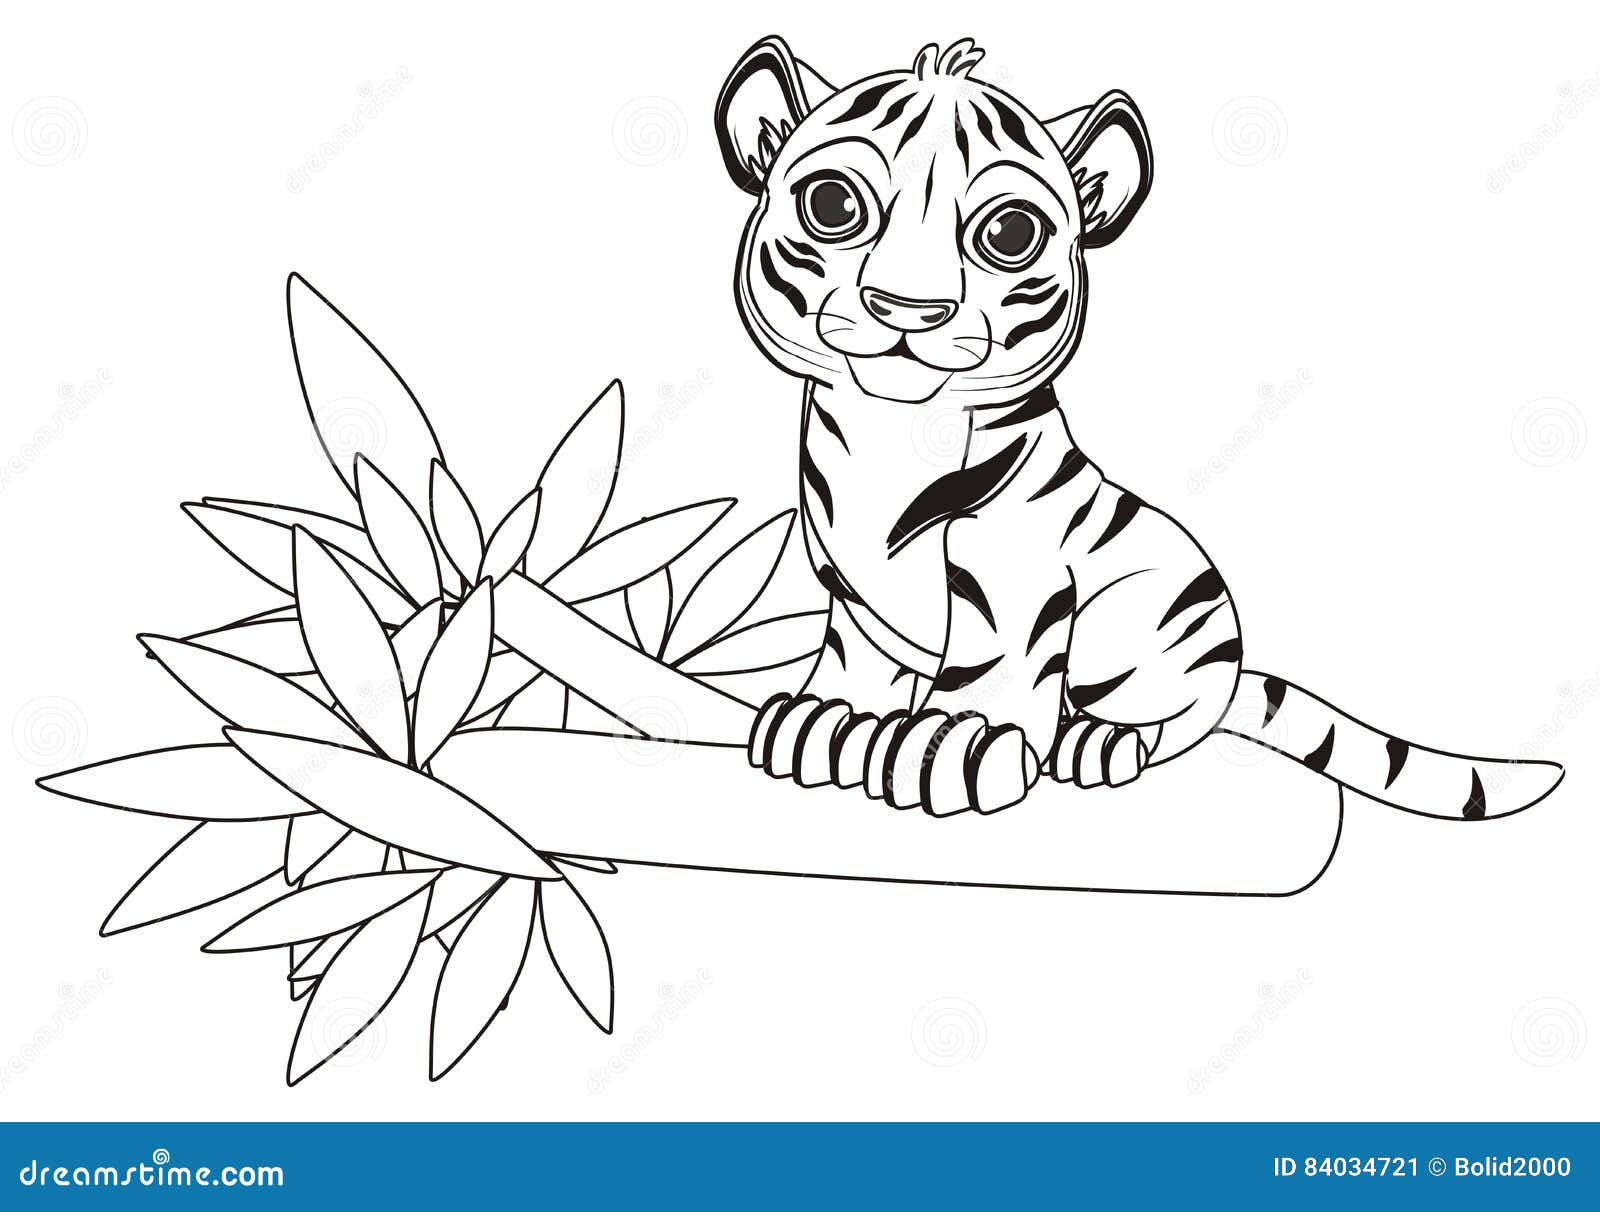 Тигр на ветке ребенок. Раскраска Тигренок. Тигр. Раскраска. Тигр раскраска для детей. Тигренок раскраска для детей.